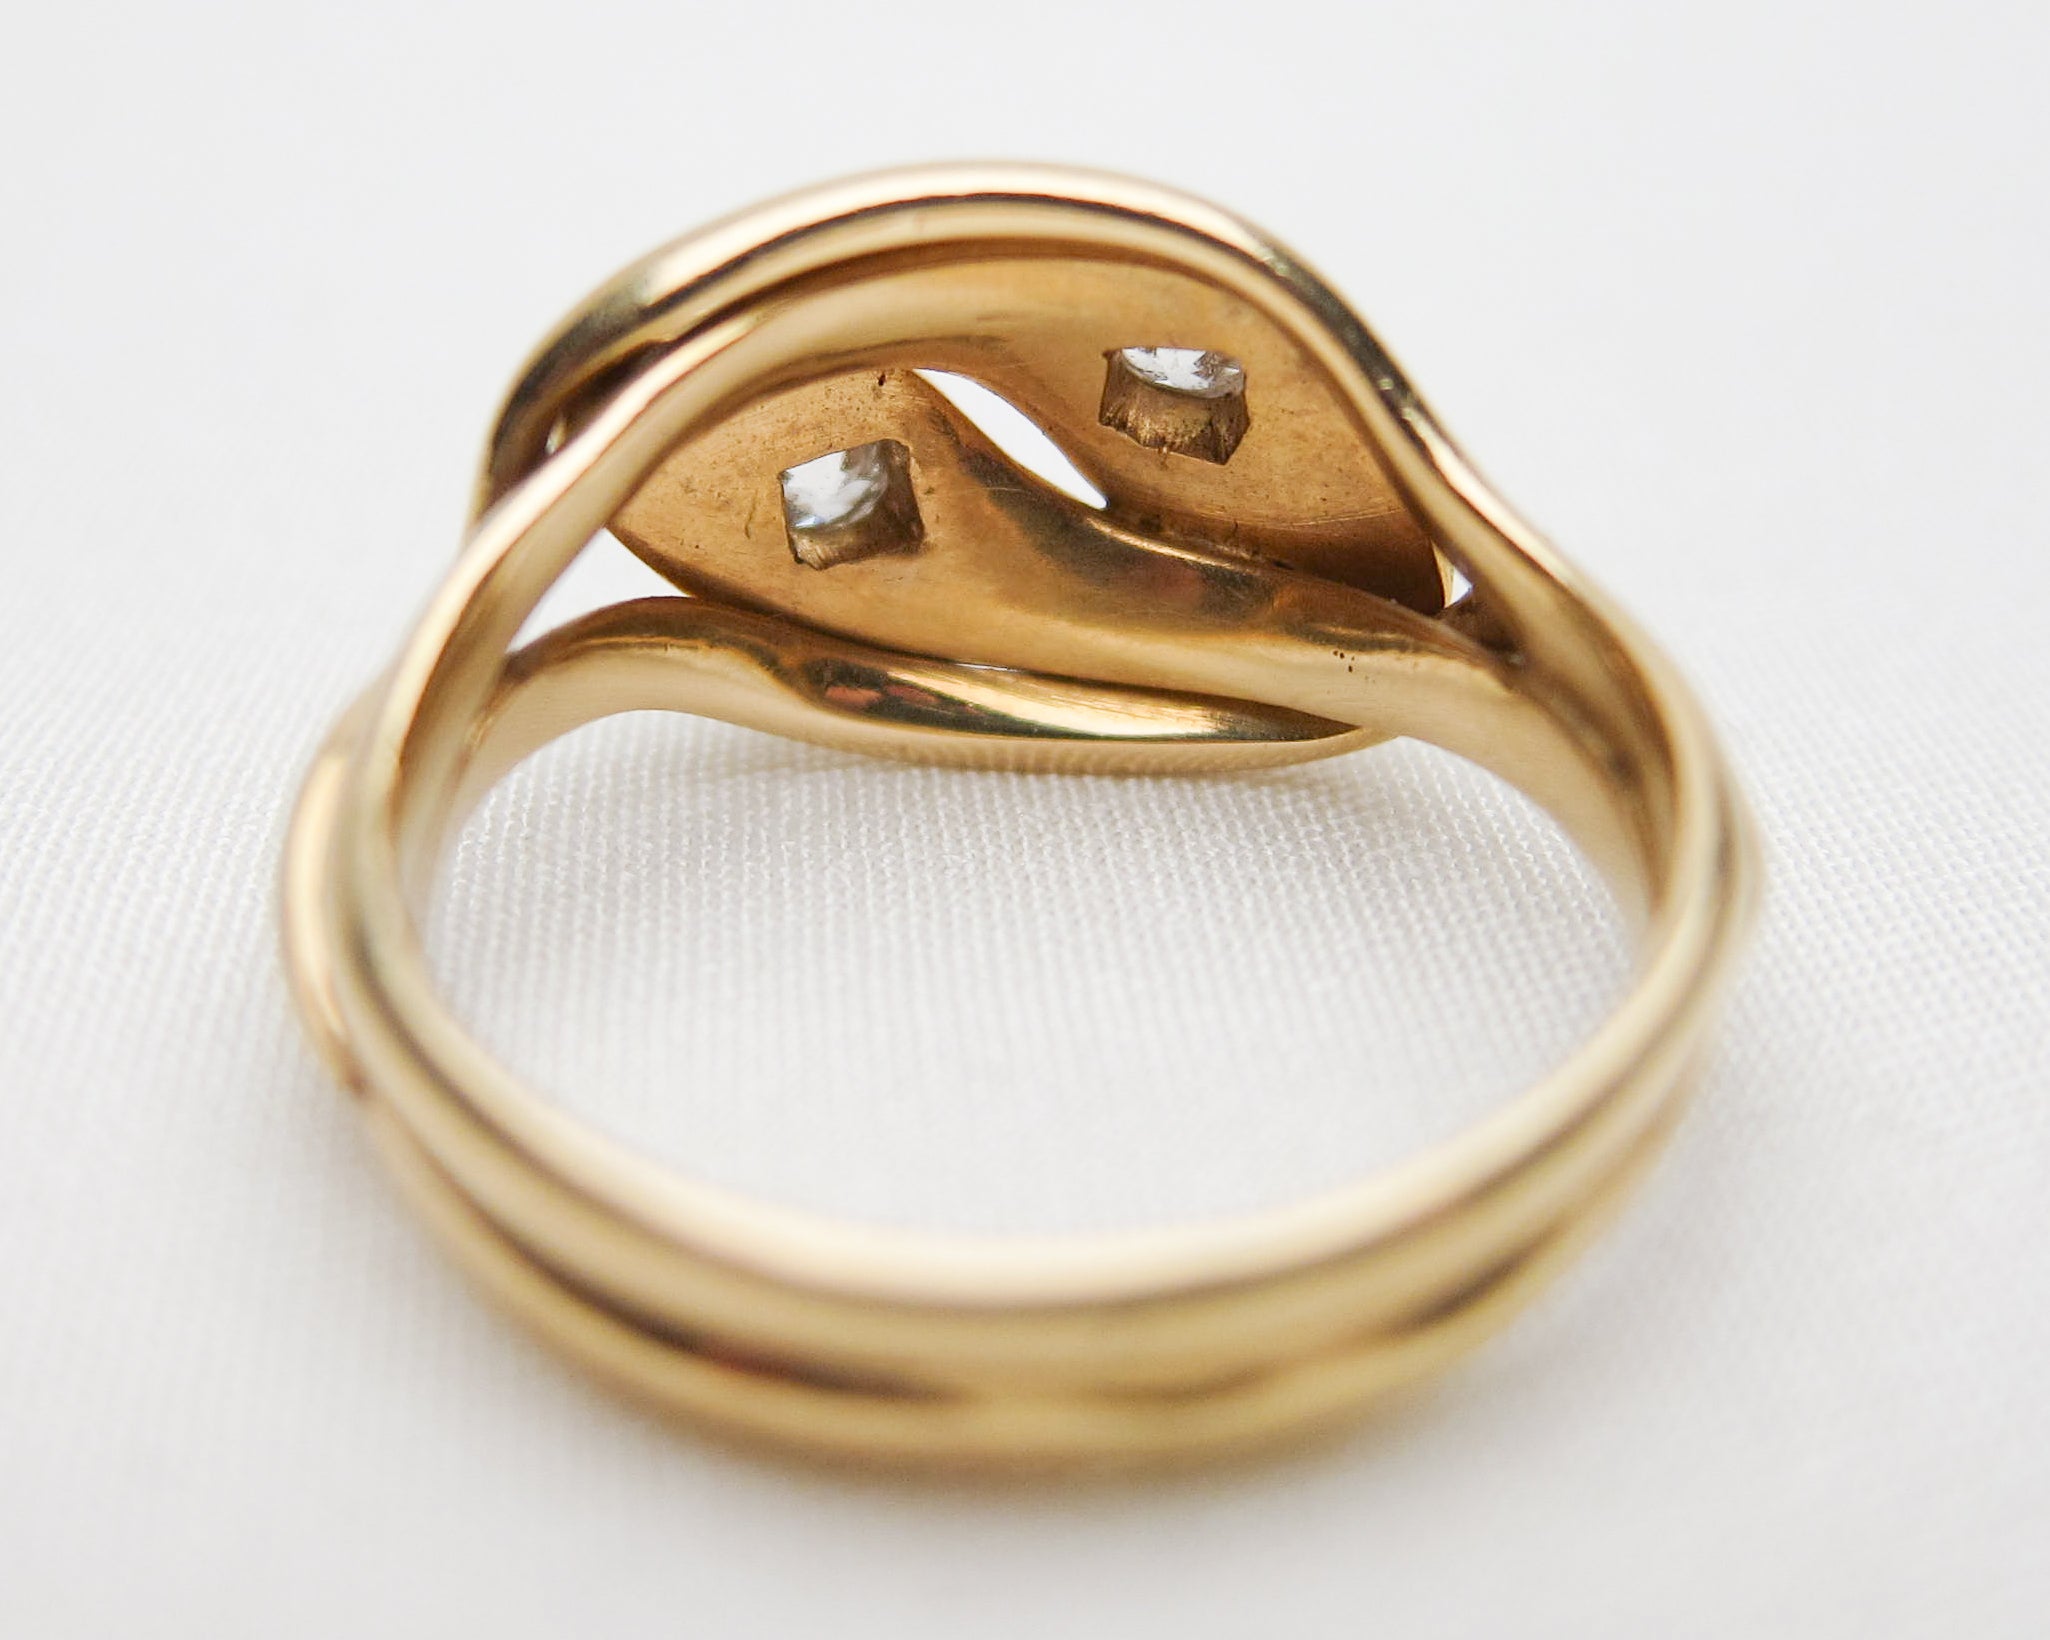 Victorian Diamond & Ruby Snake Ring